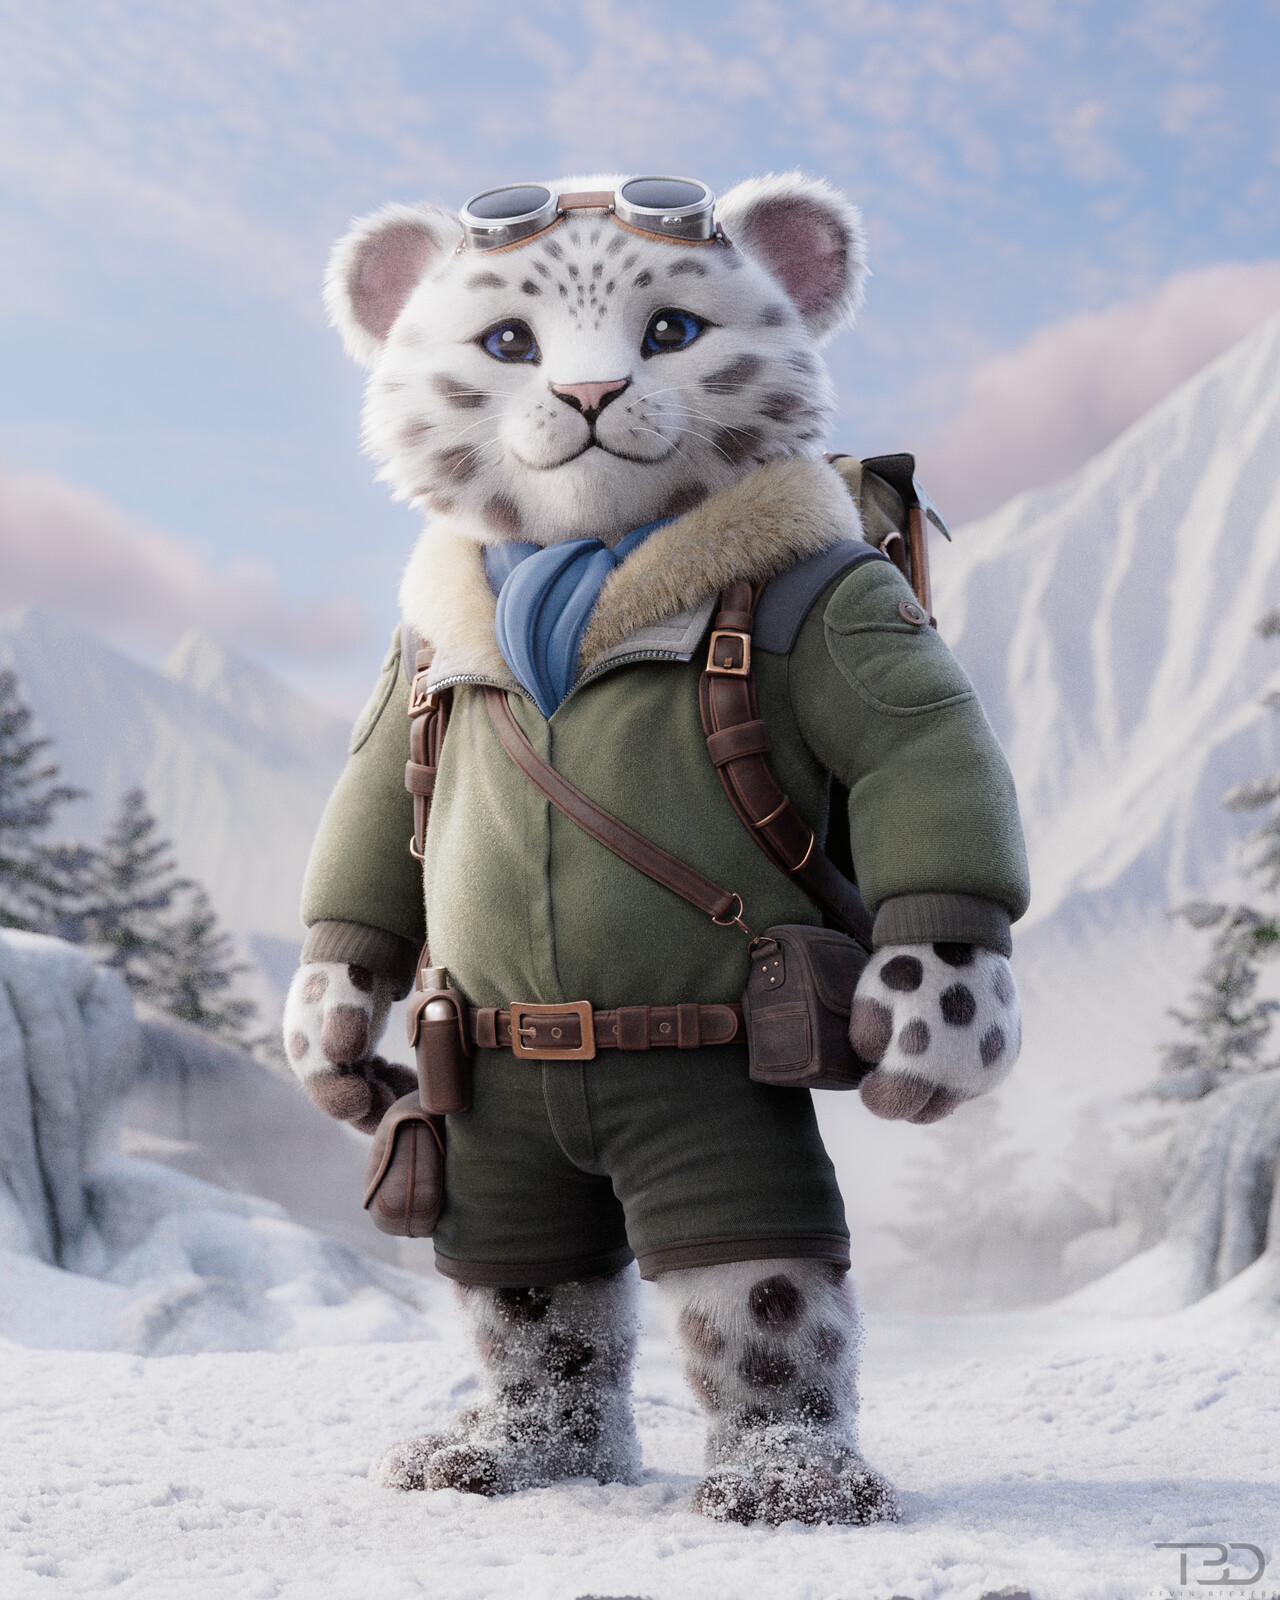 Jack The snow leopard